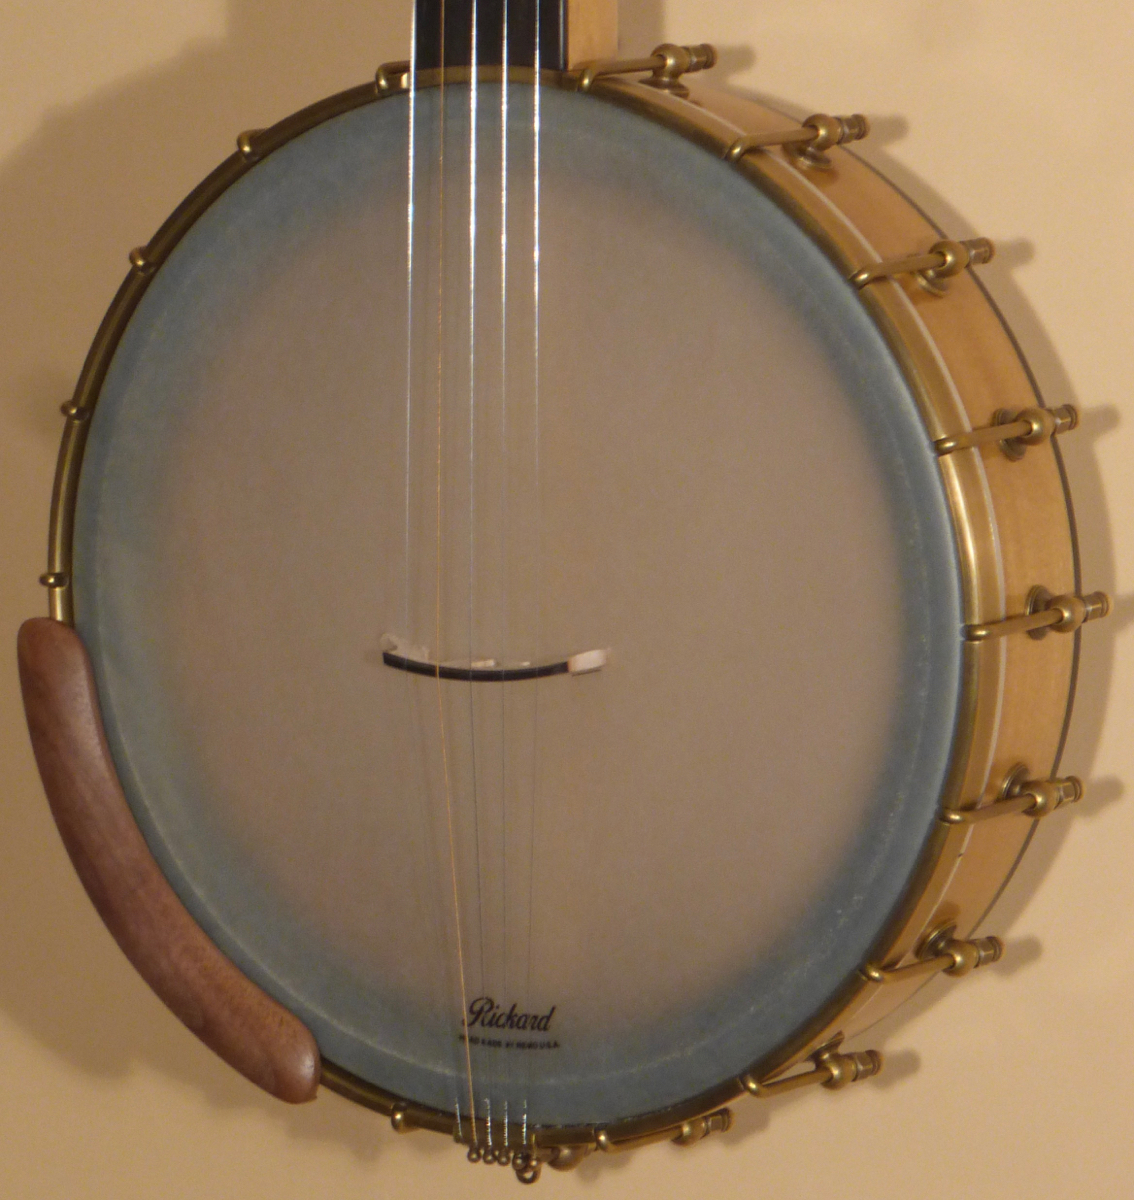 2023 Rickard 12″ Dobson Open-Back Banjo Product